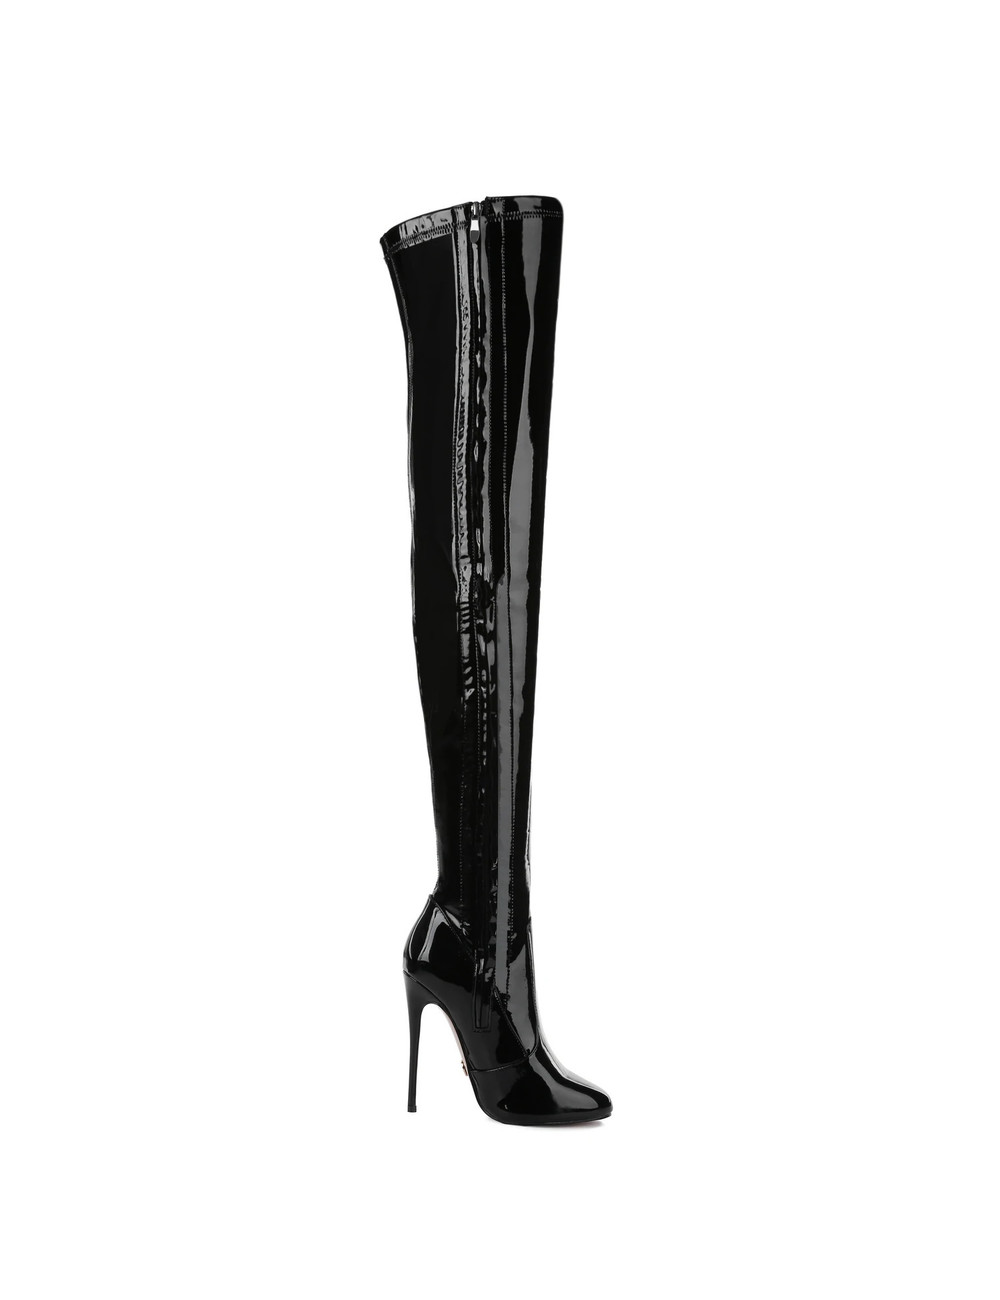 Giaro BELINDA BLACK SHINY THIGH BOOTS - Giaro High Heels | Official ...